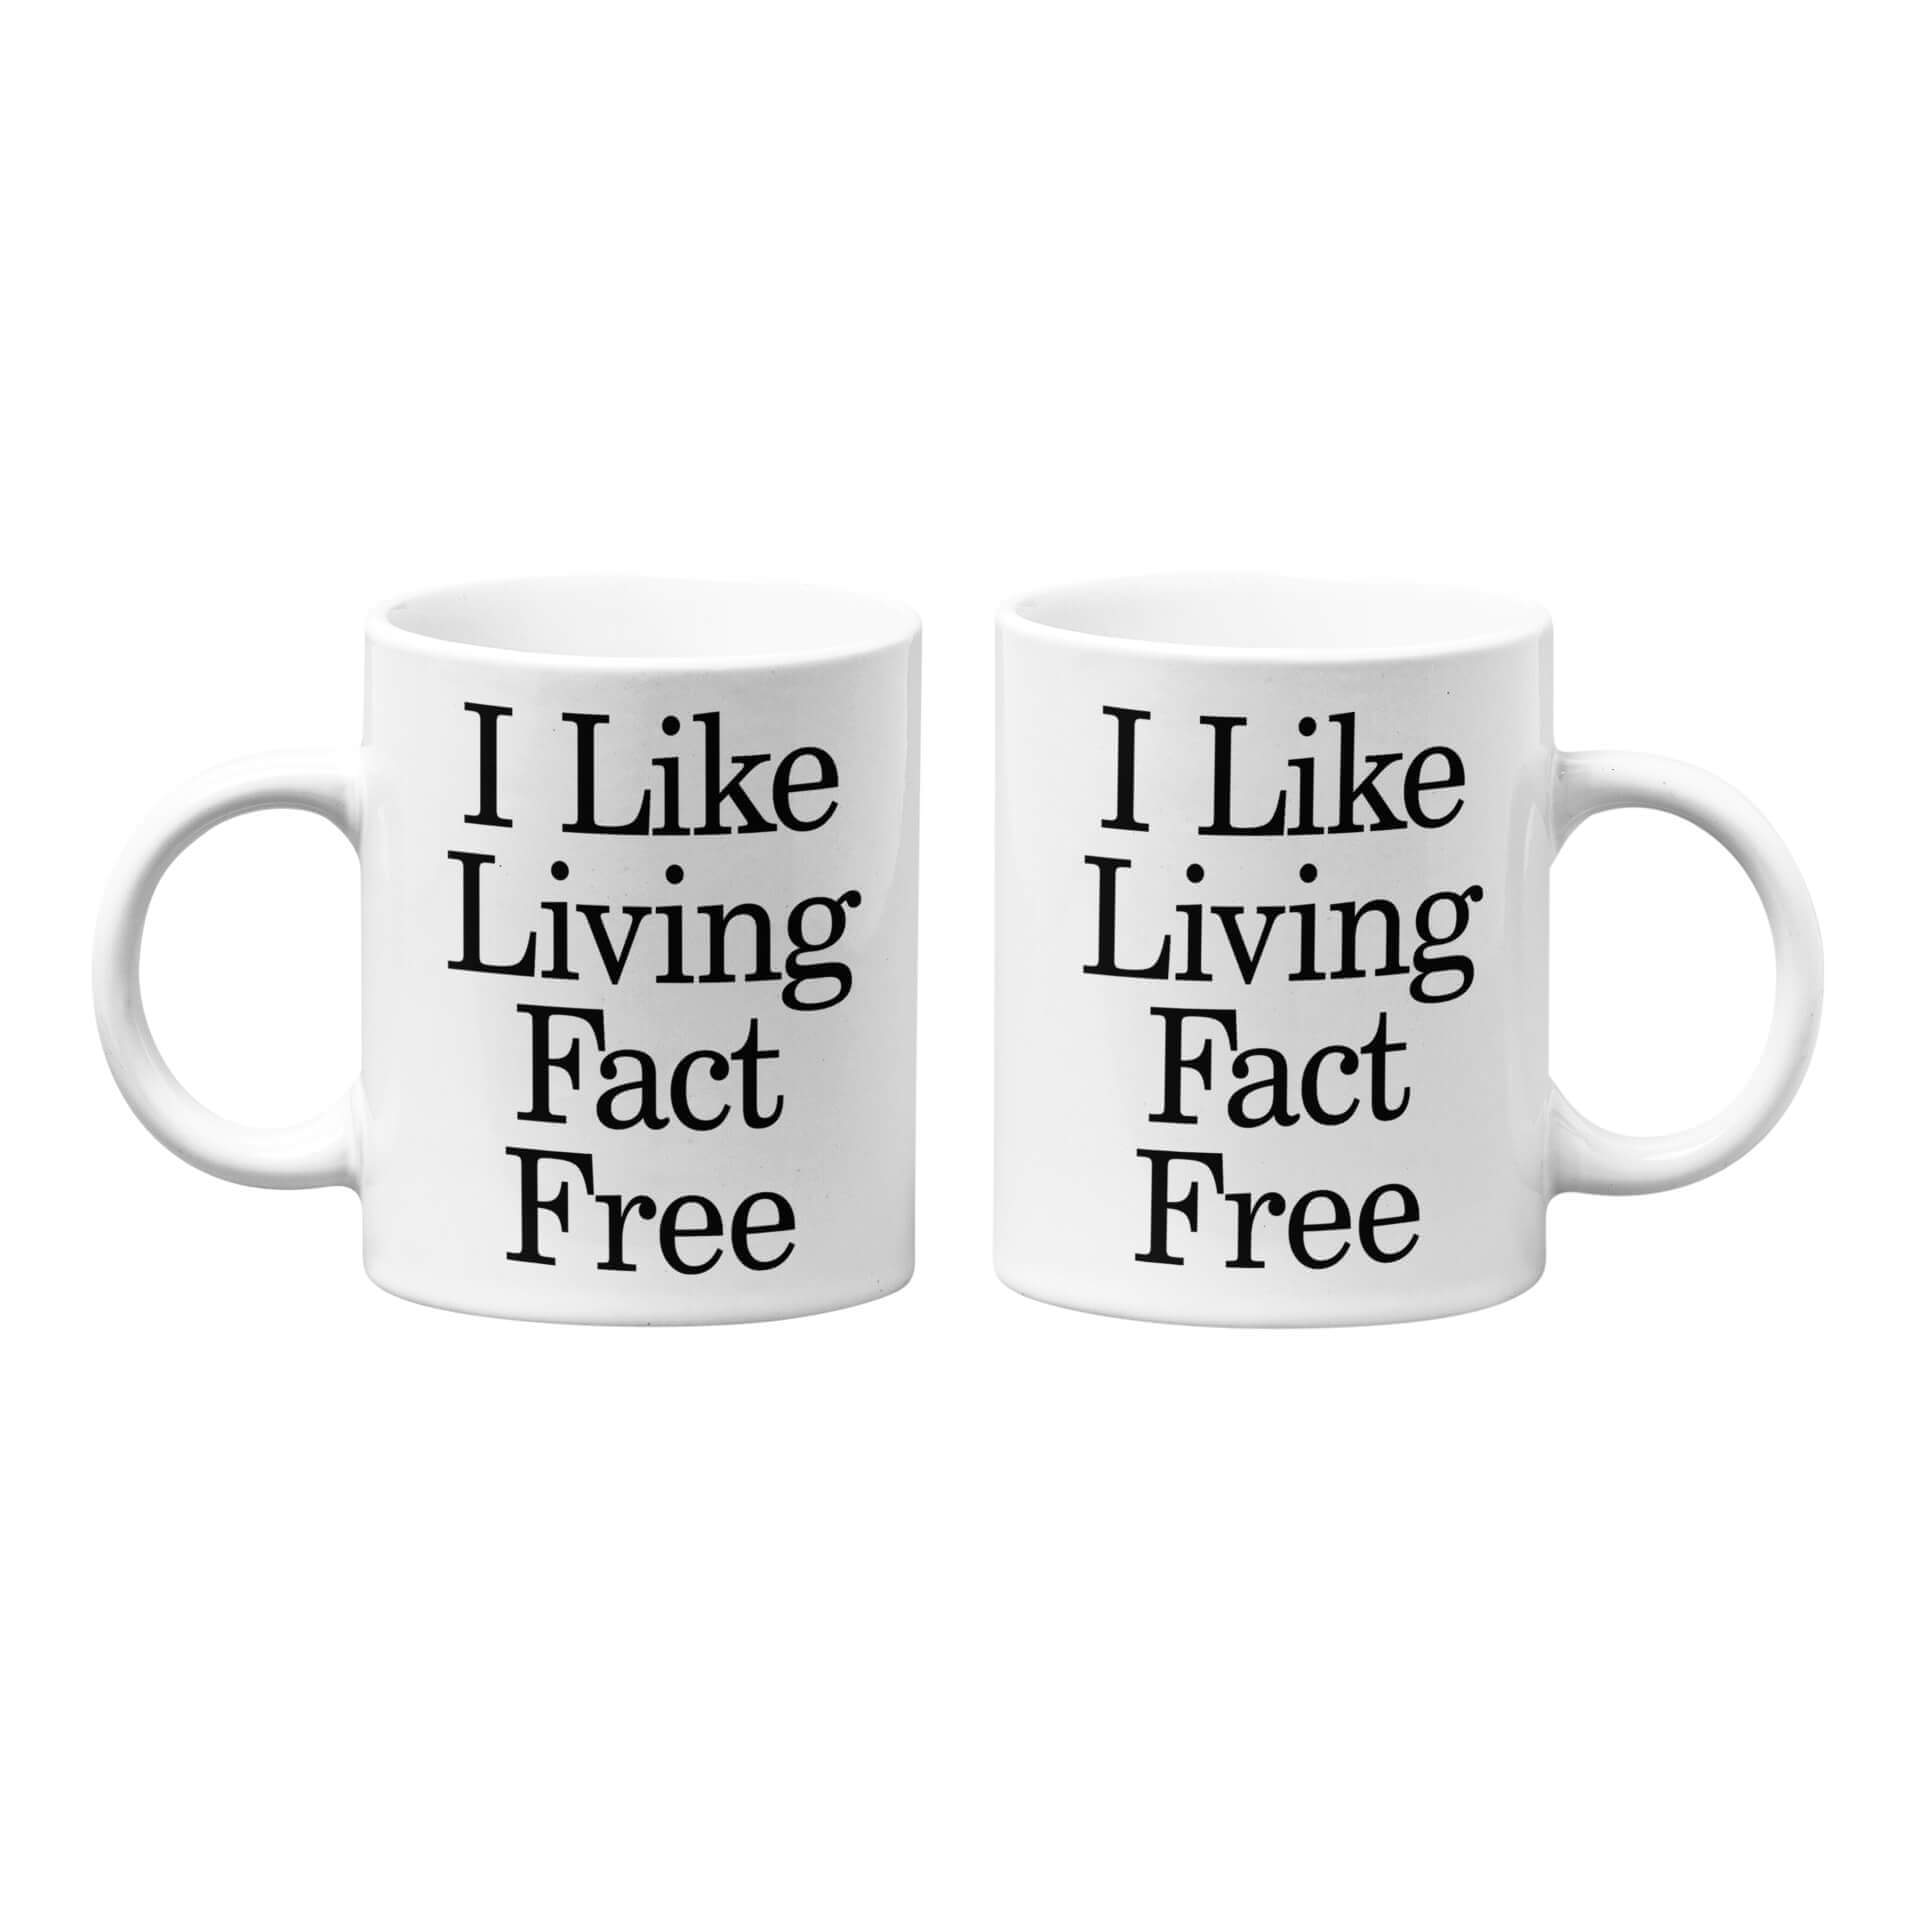 I Like Living Fact Free Mug